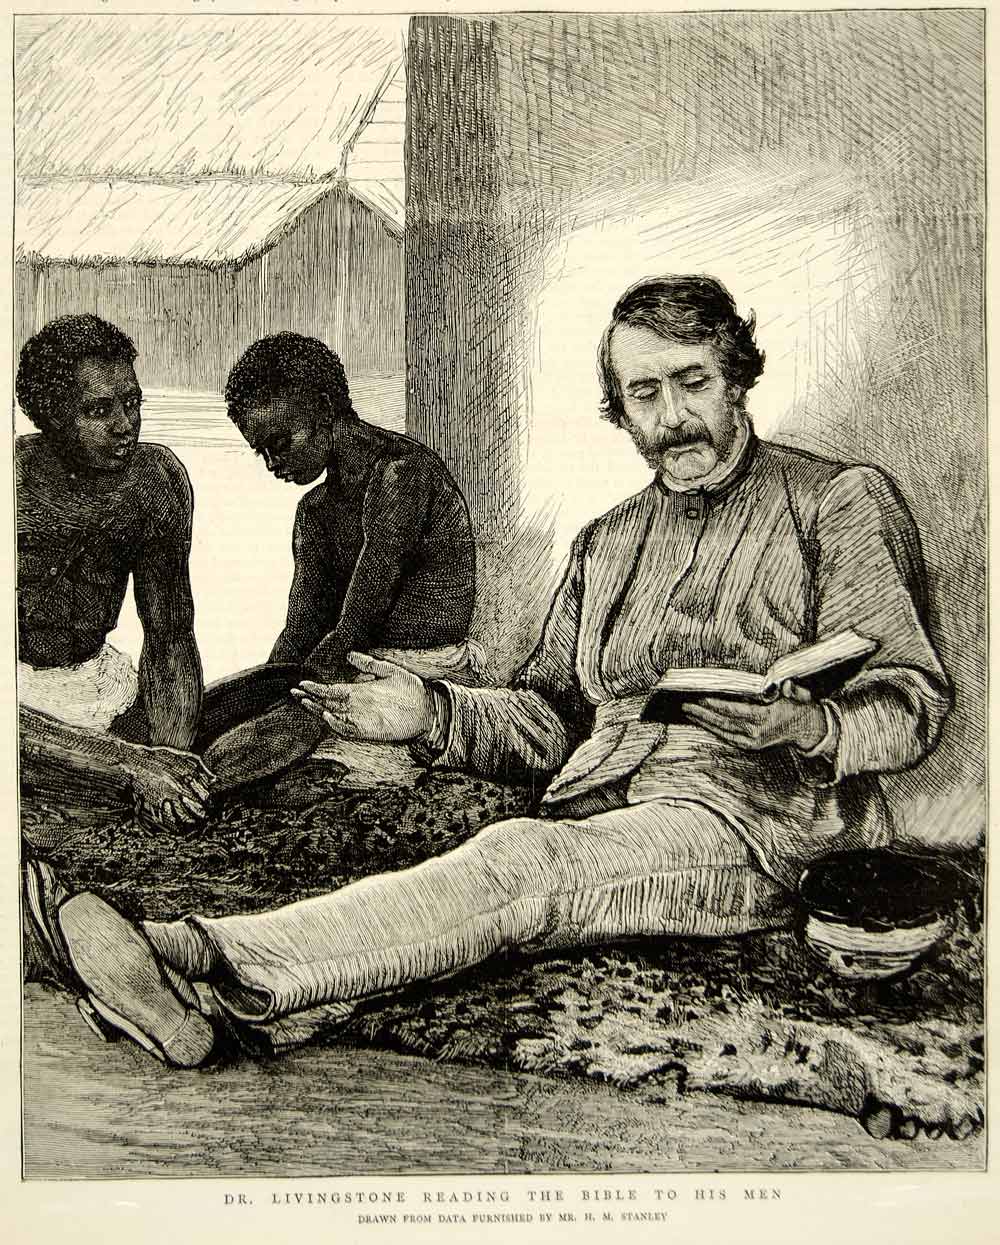 1874 Wood Engraving David Livingstone Portrait Missionary Africa Victorian YTG8